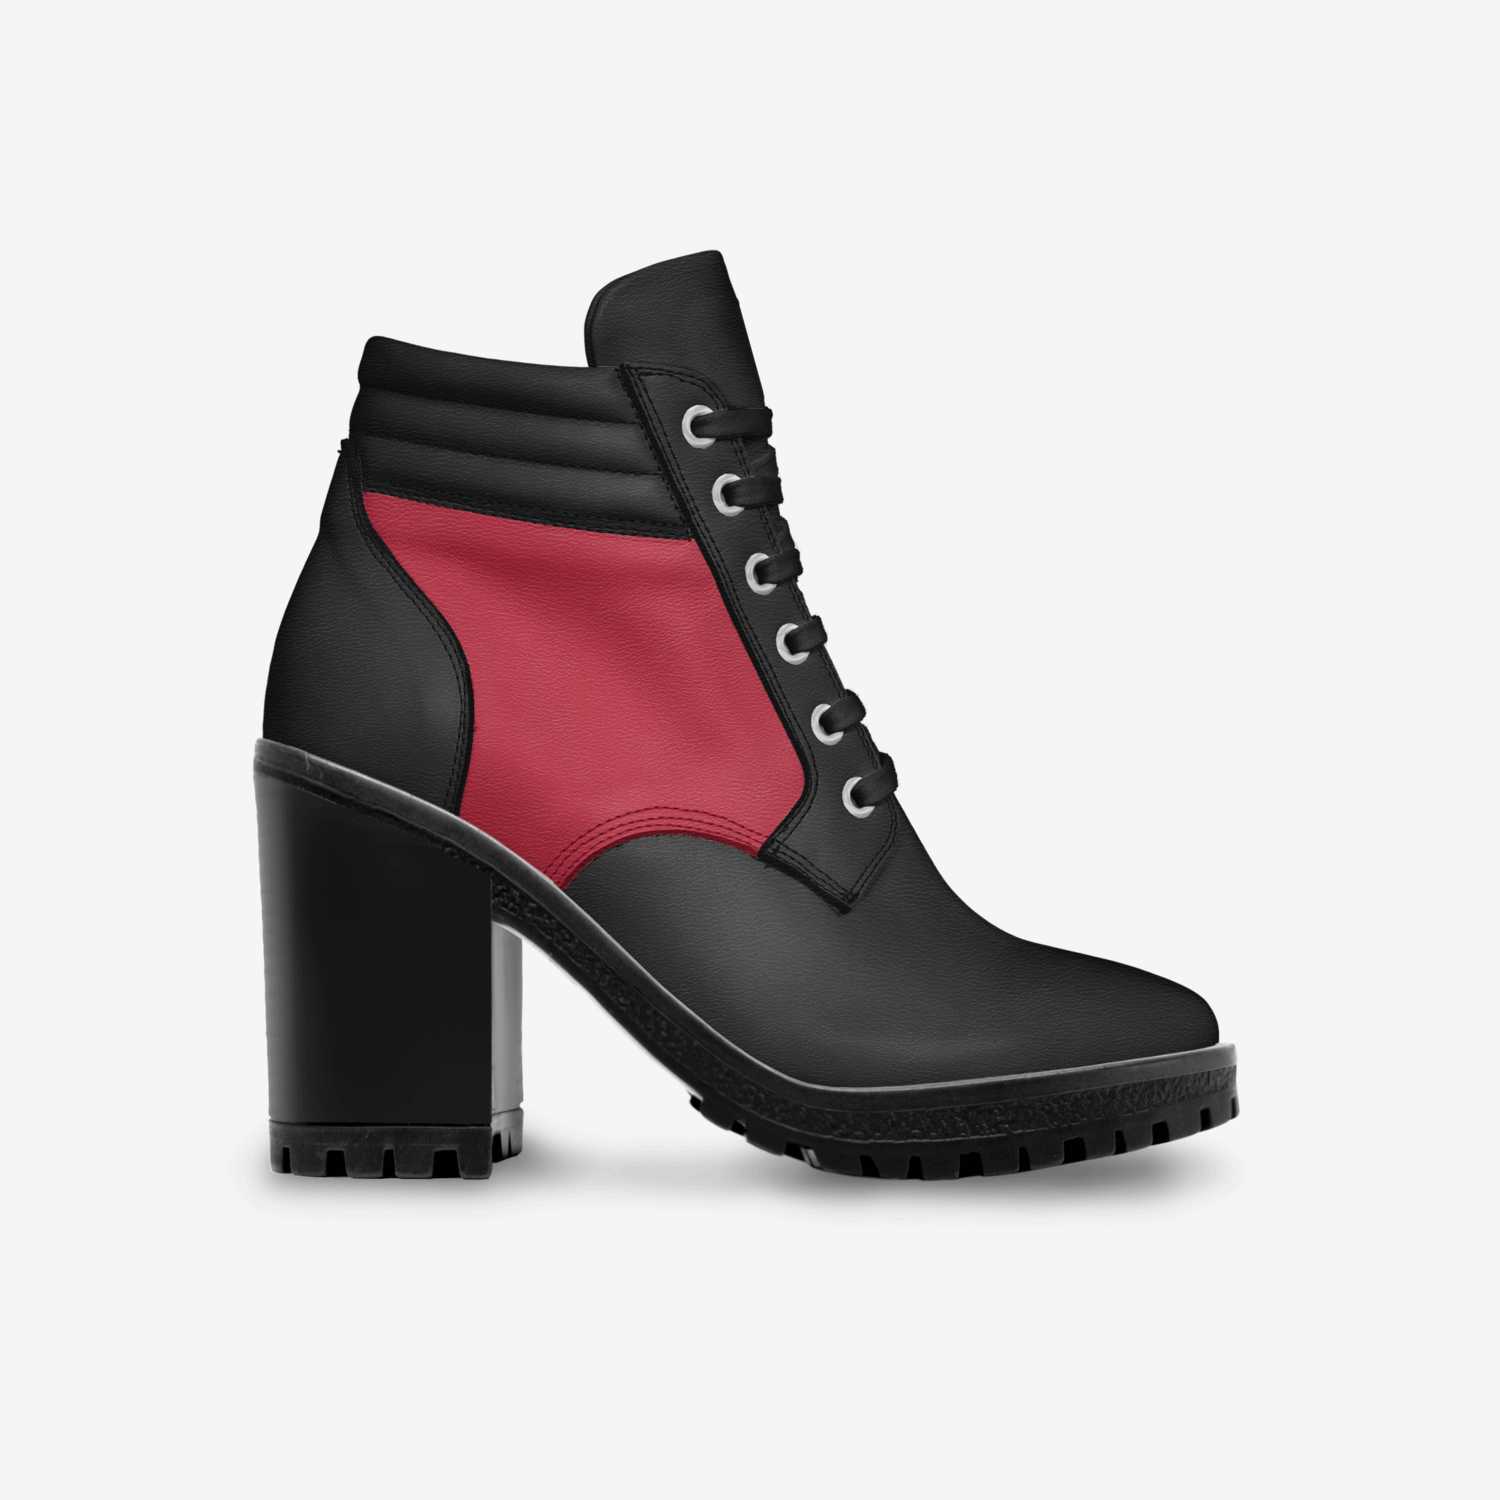 Natasha Romanoff custom made in Italy shoes by Riley Kavanaugh | Side view